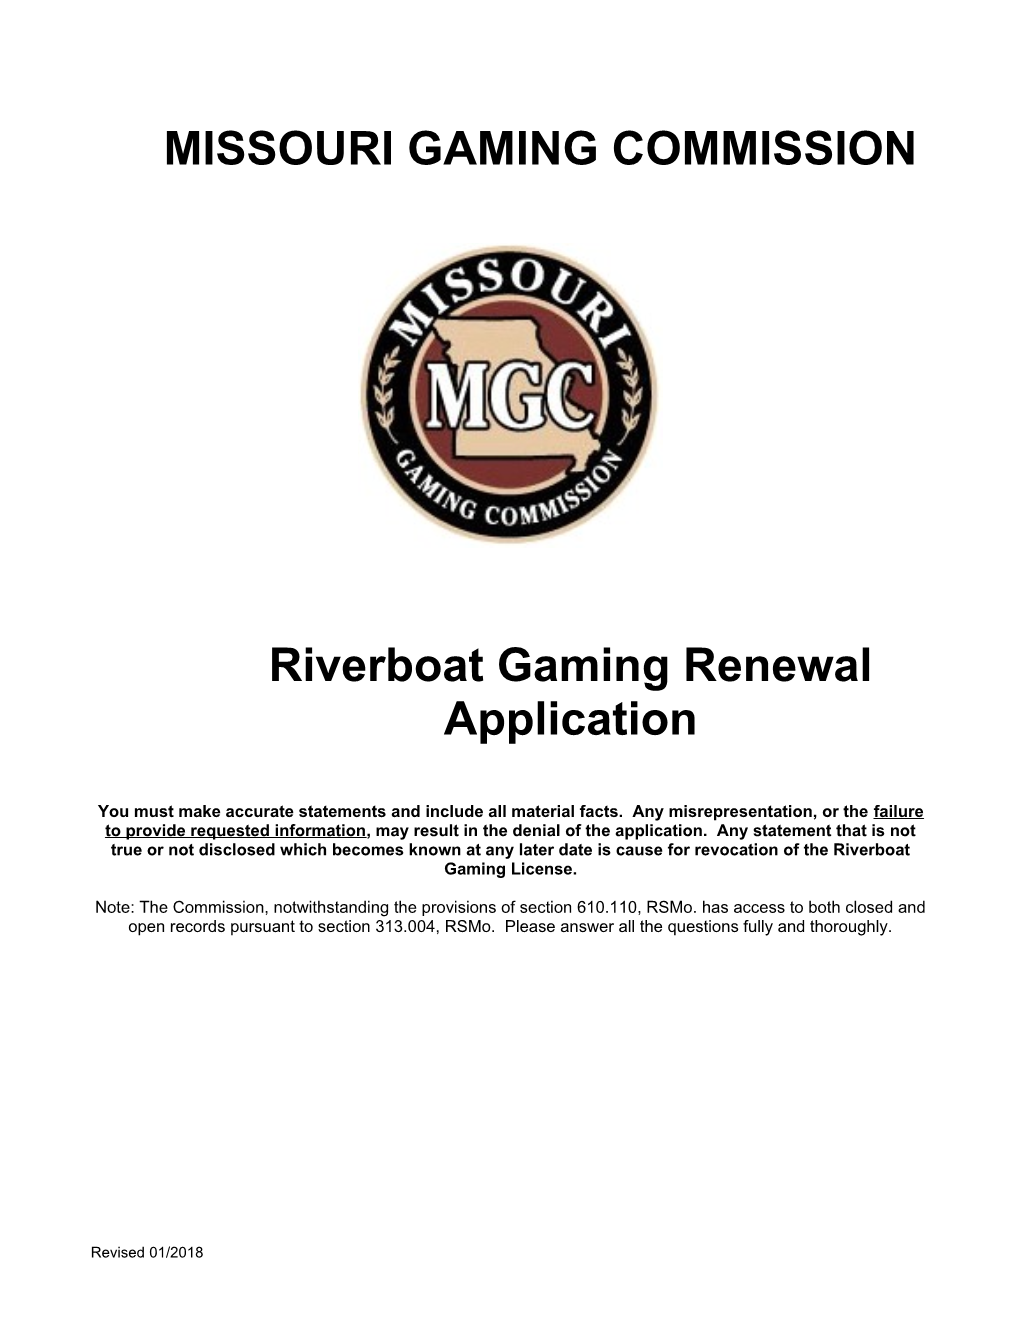 Riverboat Gaming Renewal Application